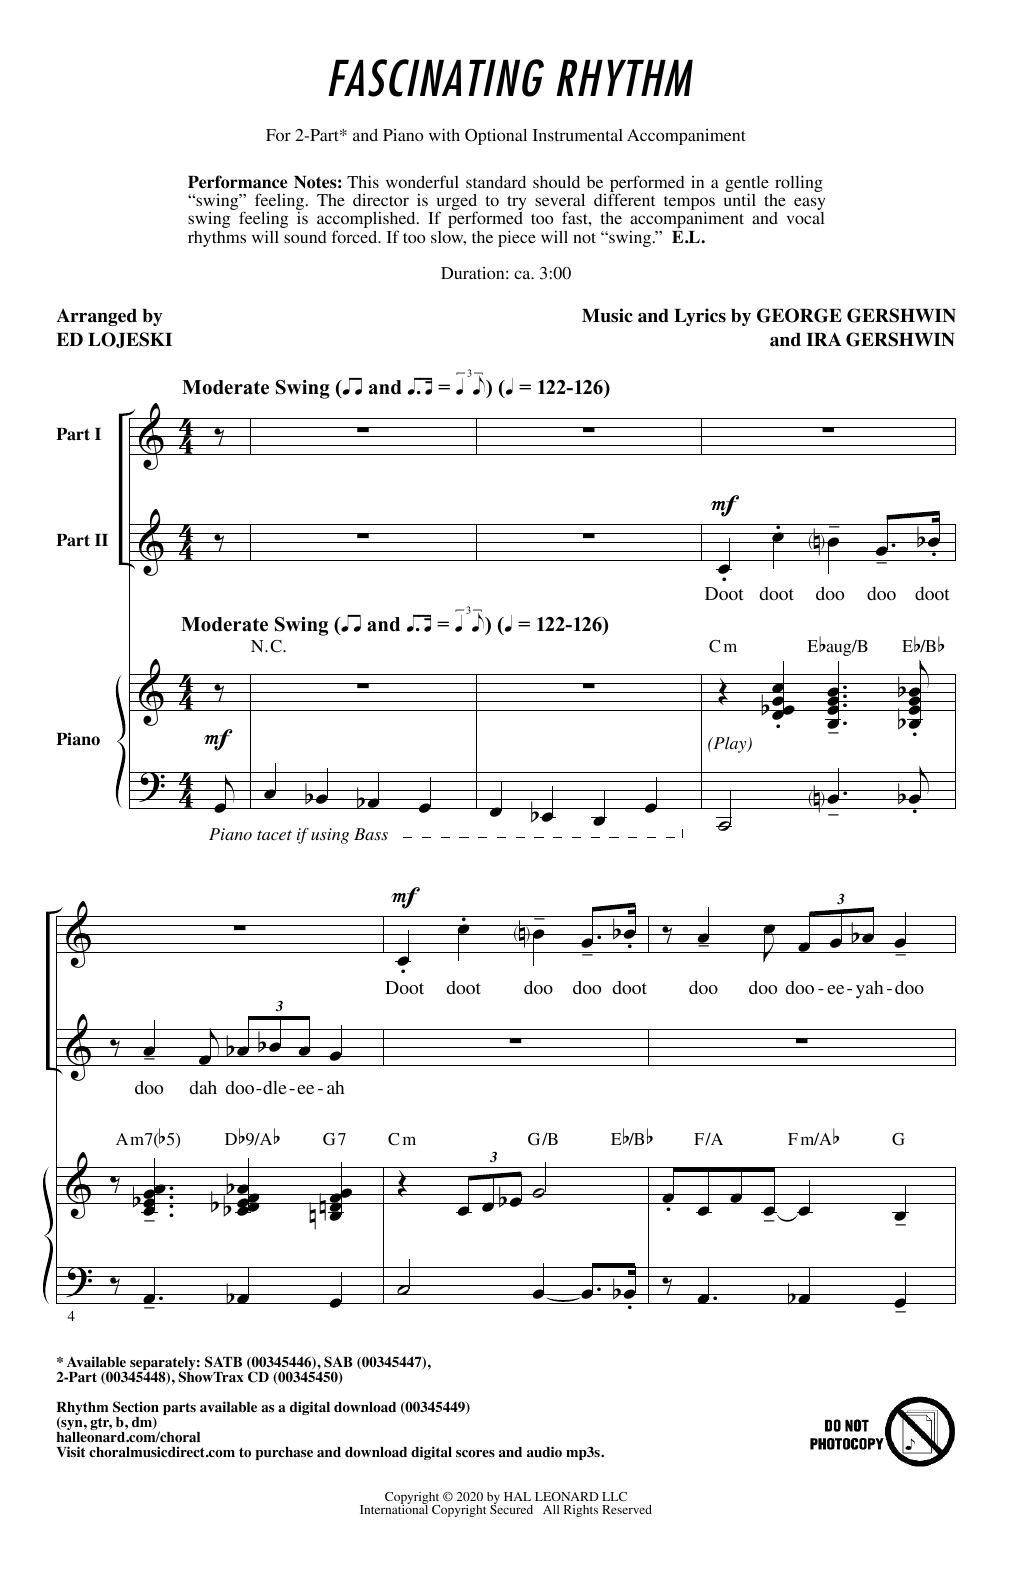 Download George Gershwin & Ira Gershwin Fascinating Rhythm (from Lady Be Good) Sheet Music